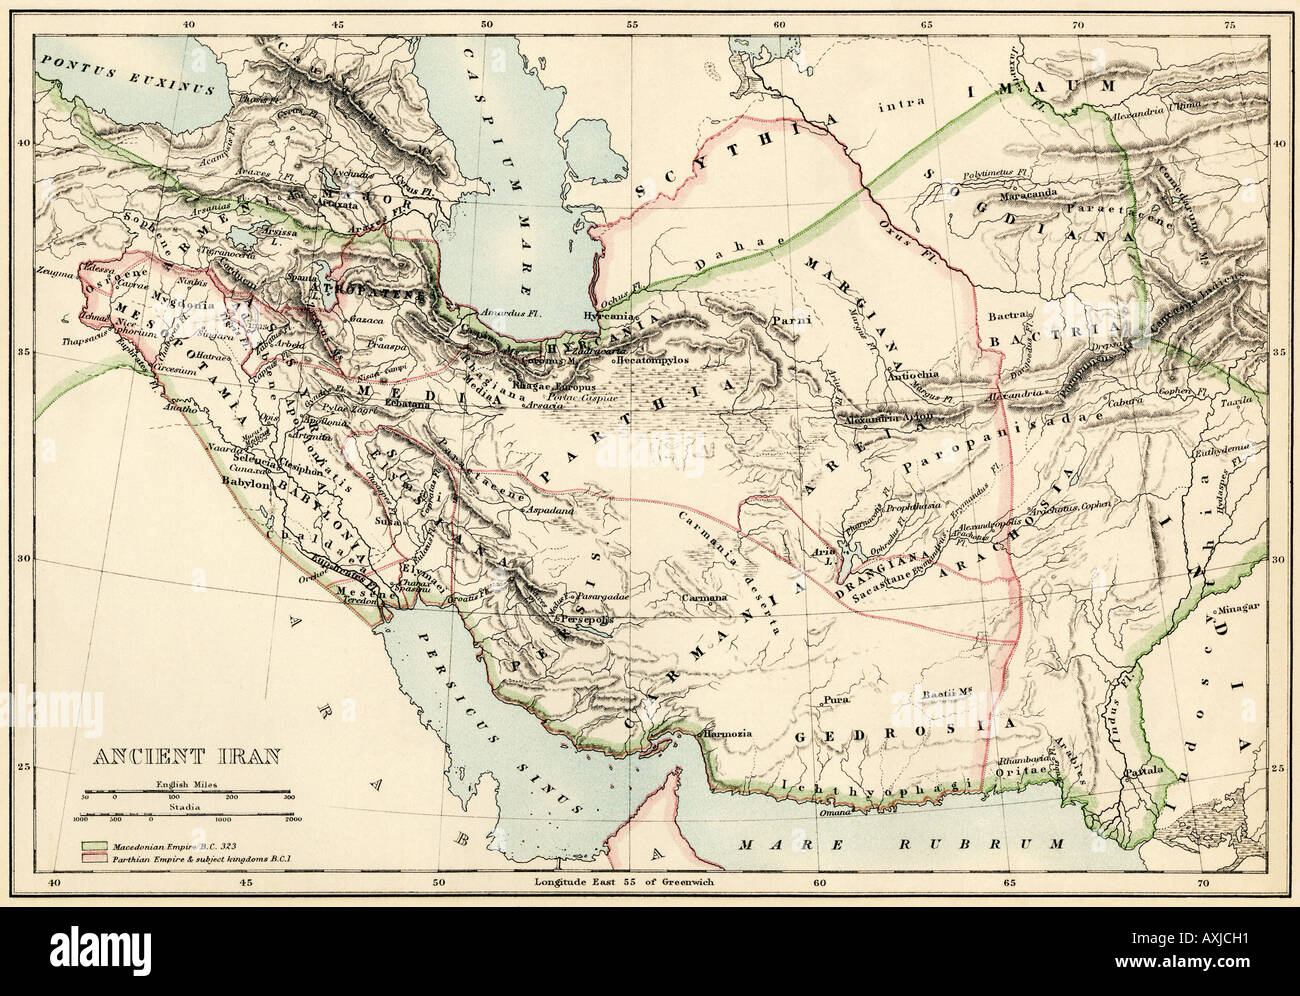 Османский залив Персия. Персия 19 век карта. Персия в 18 веке карта.